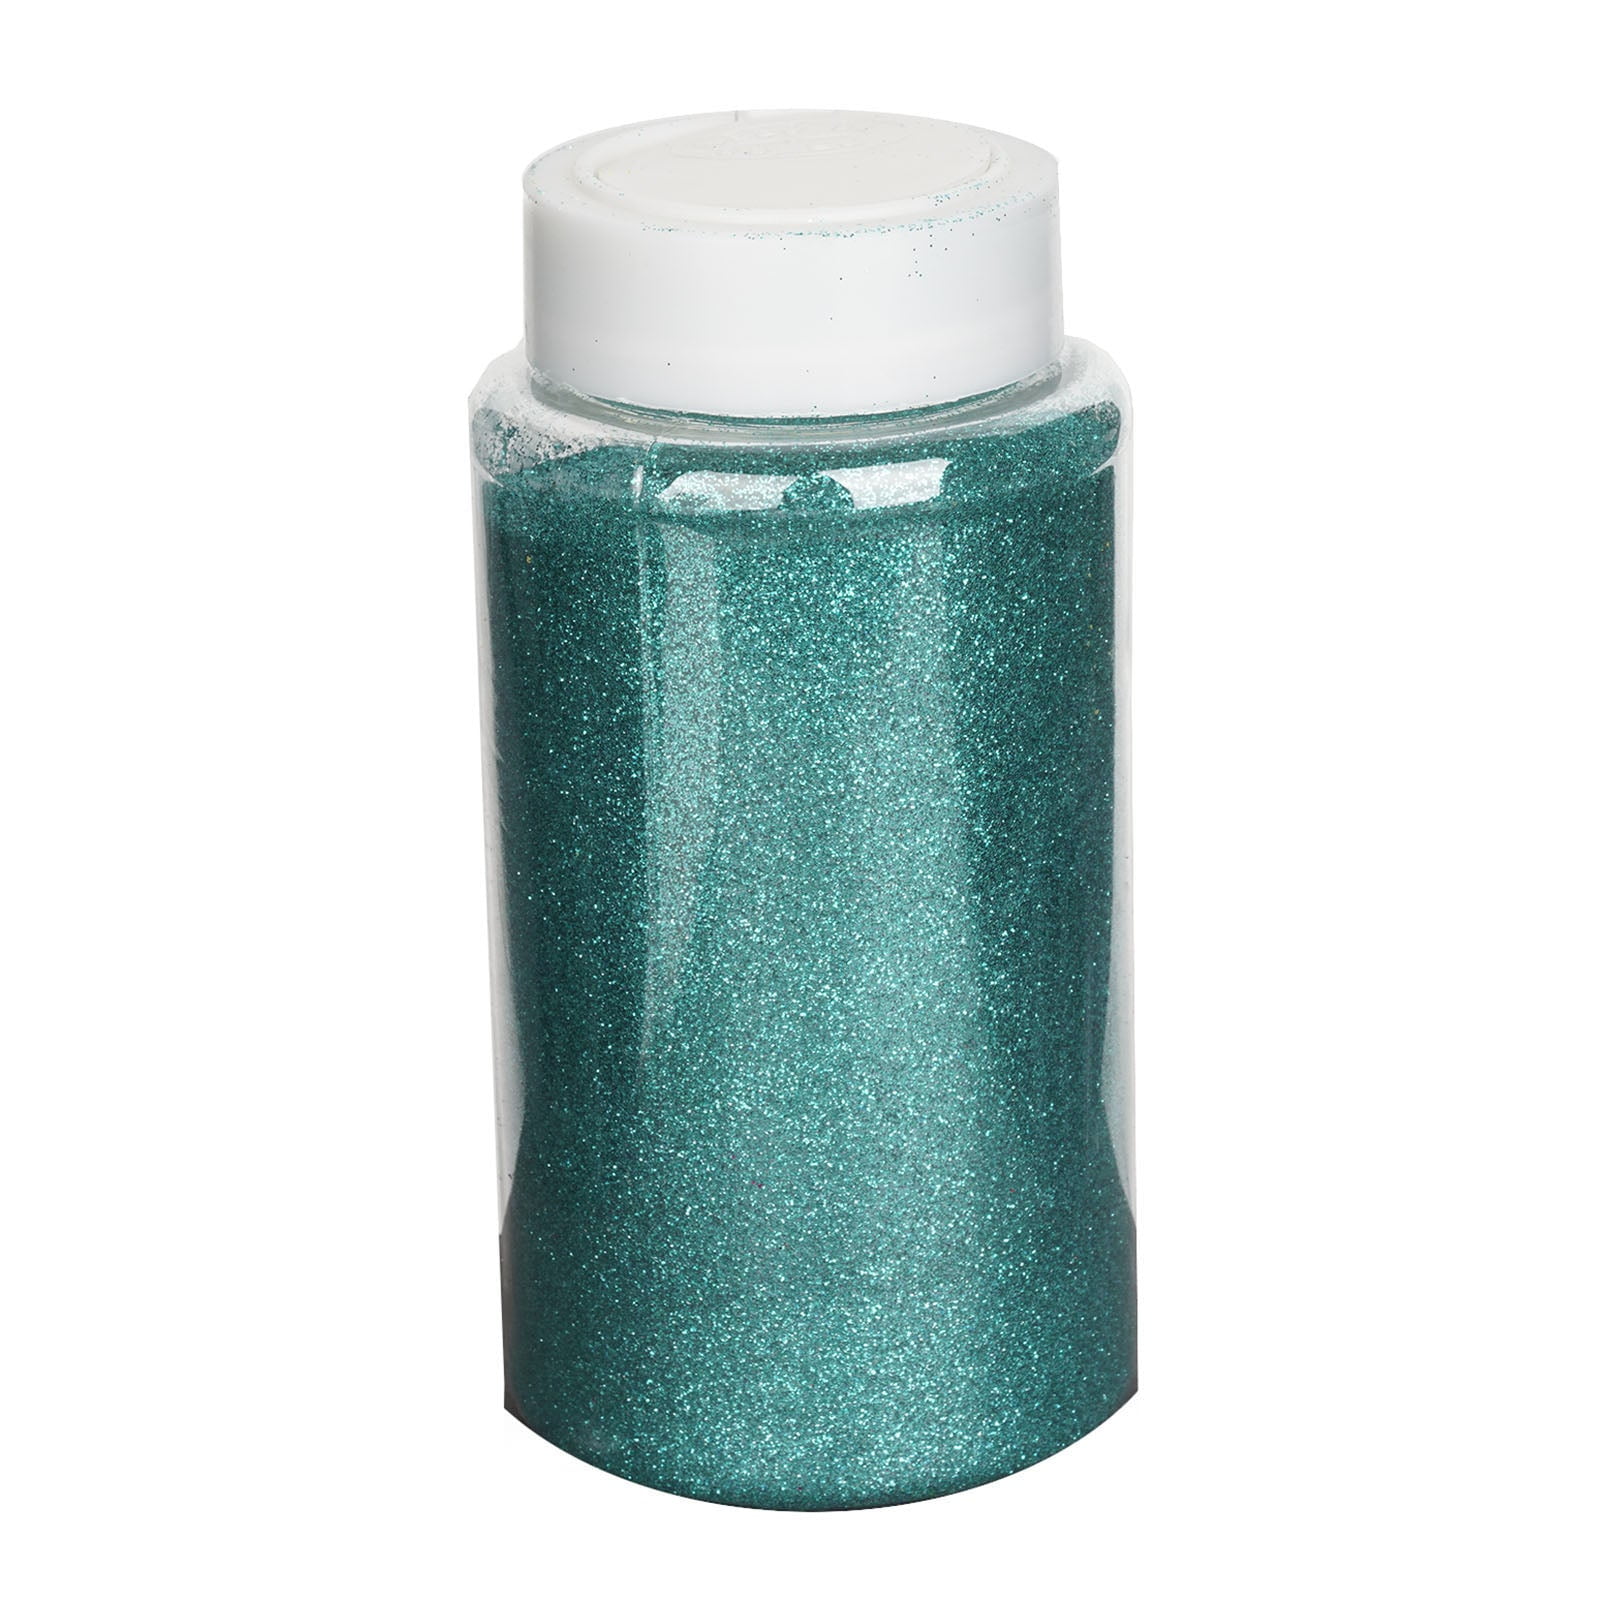 Glitter - 1 LB Light Blue Fine Glitter Shaker, Glitter for Resin, Glitter  for Crafts, Extra Fine Glitter for Scrapbooking and Art and Craft Supplies